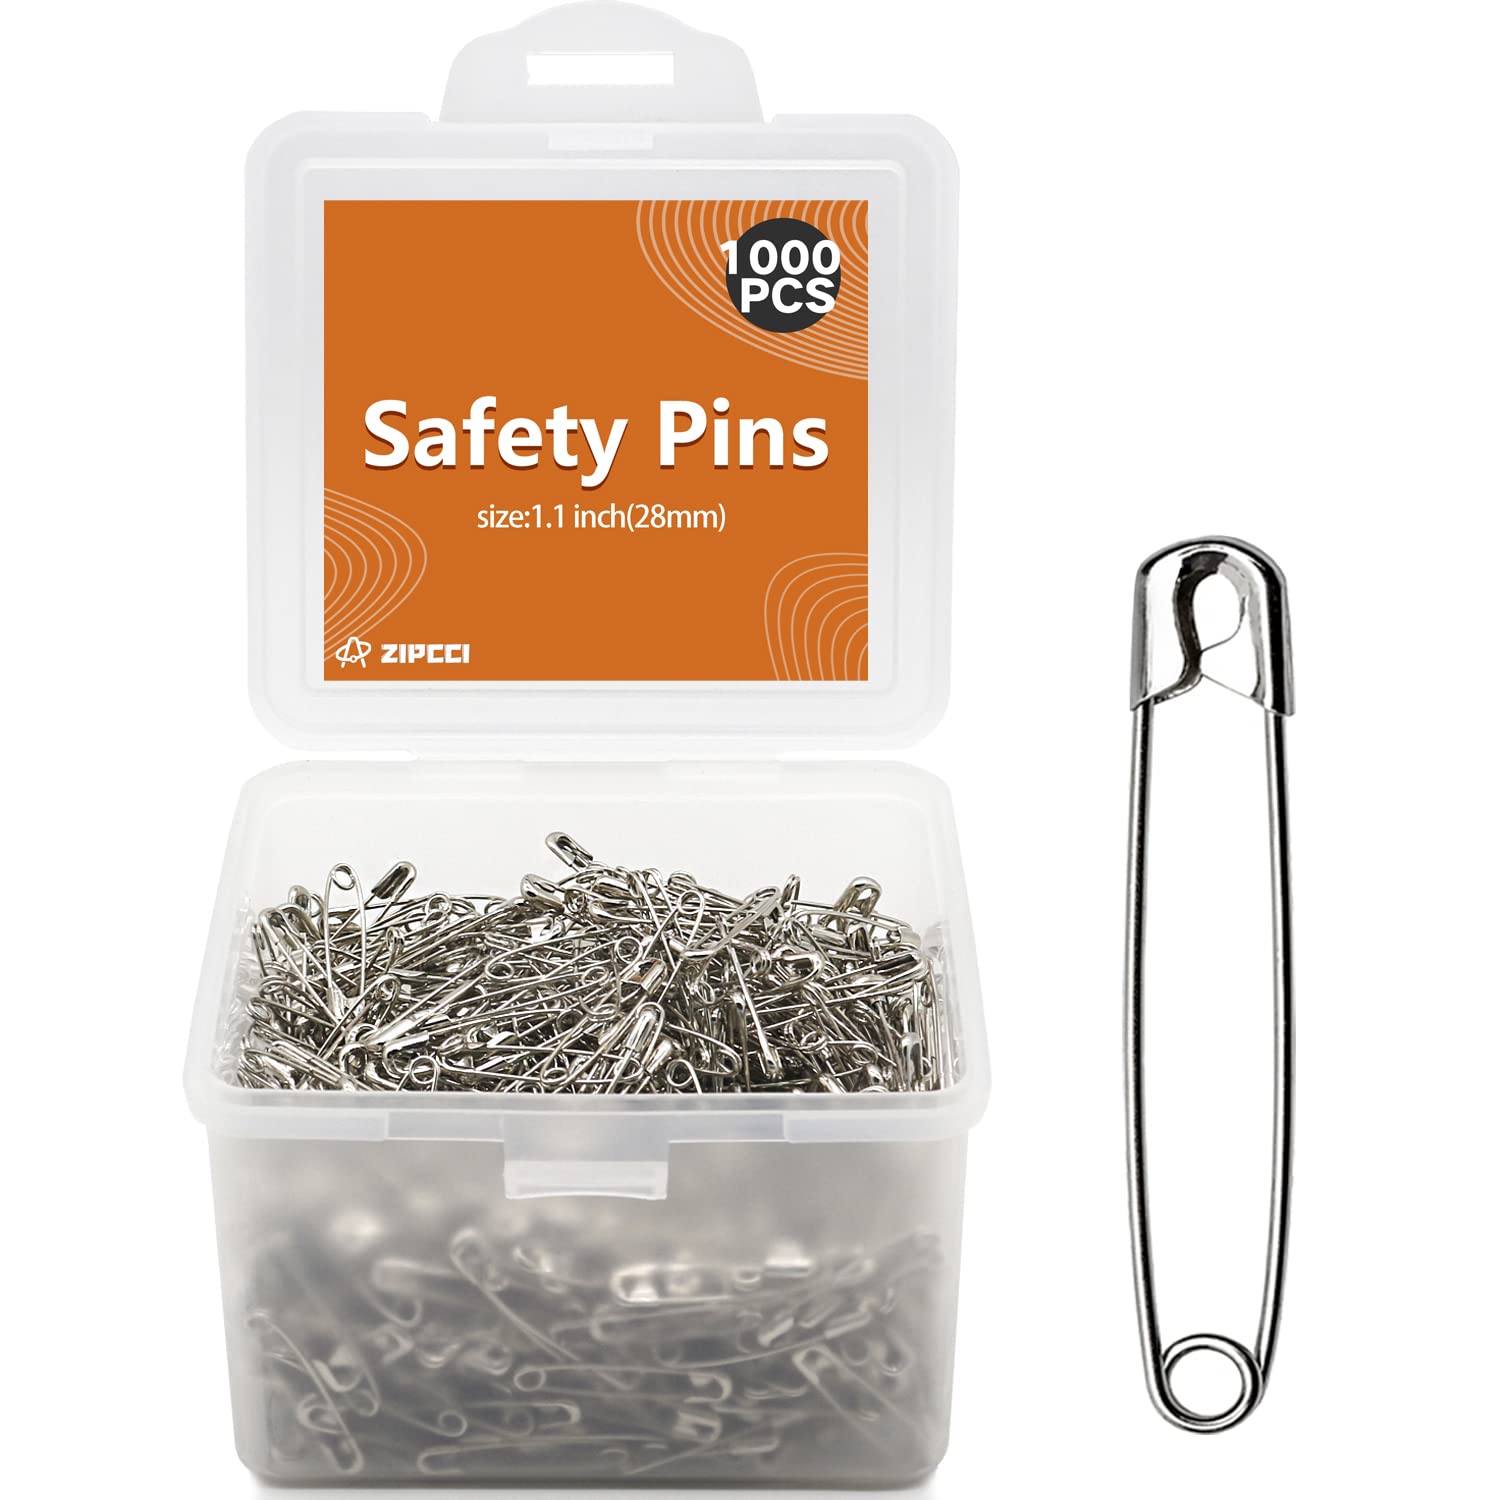 1000 Pcs ZIPCCI 1.1 inch Safety Pins Small Safety Pins Mini Safety Pins  Small Nickel Plated